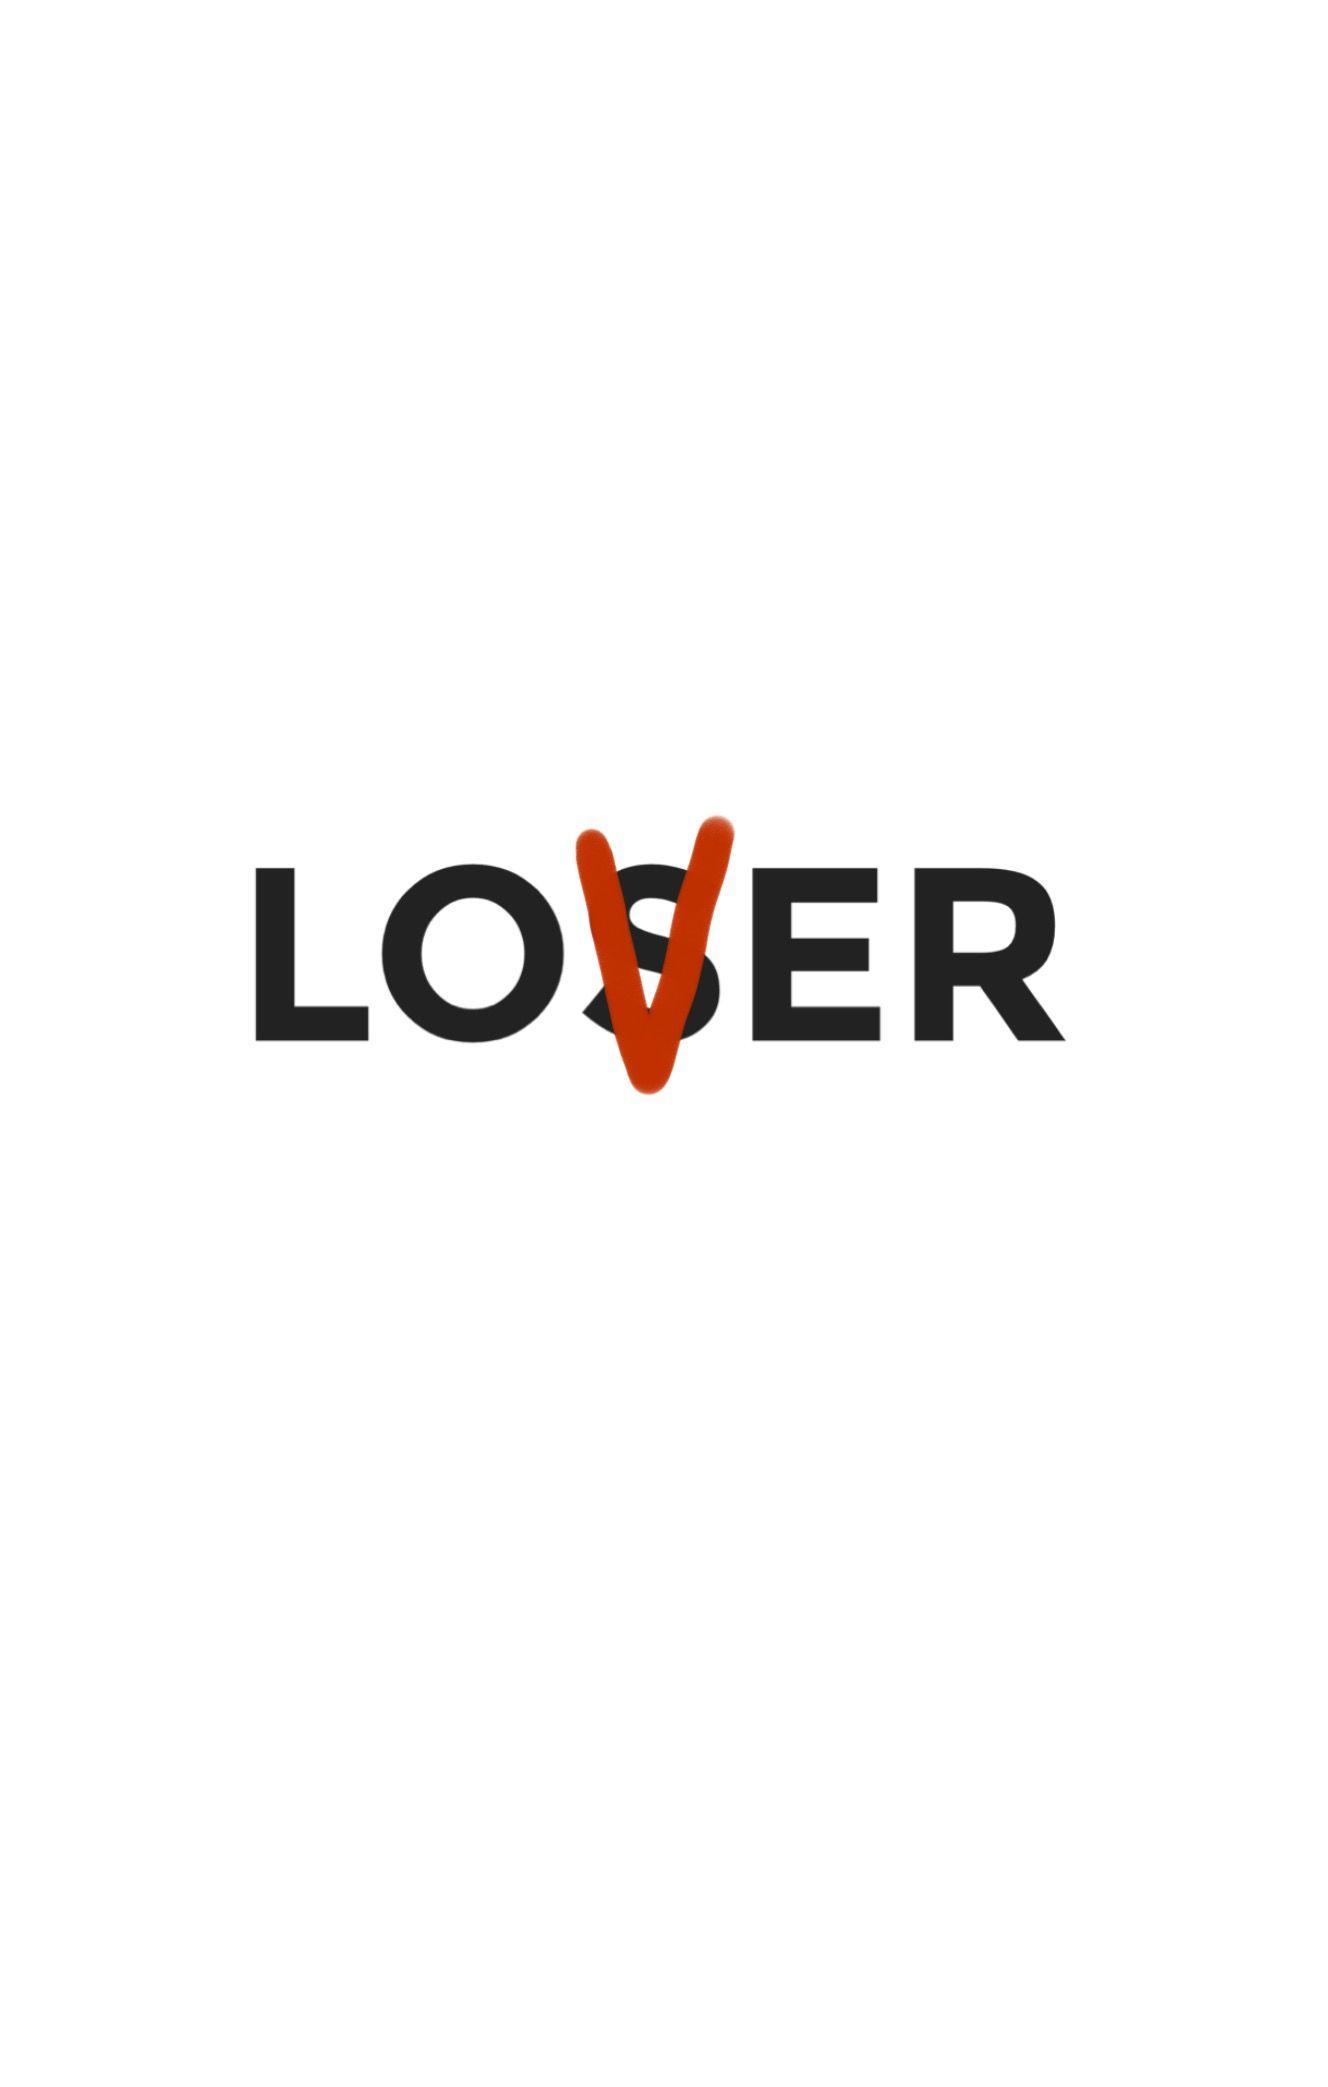 Losers club. Tattoos for lovers, Stranger things art, Stranger things